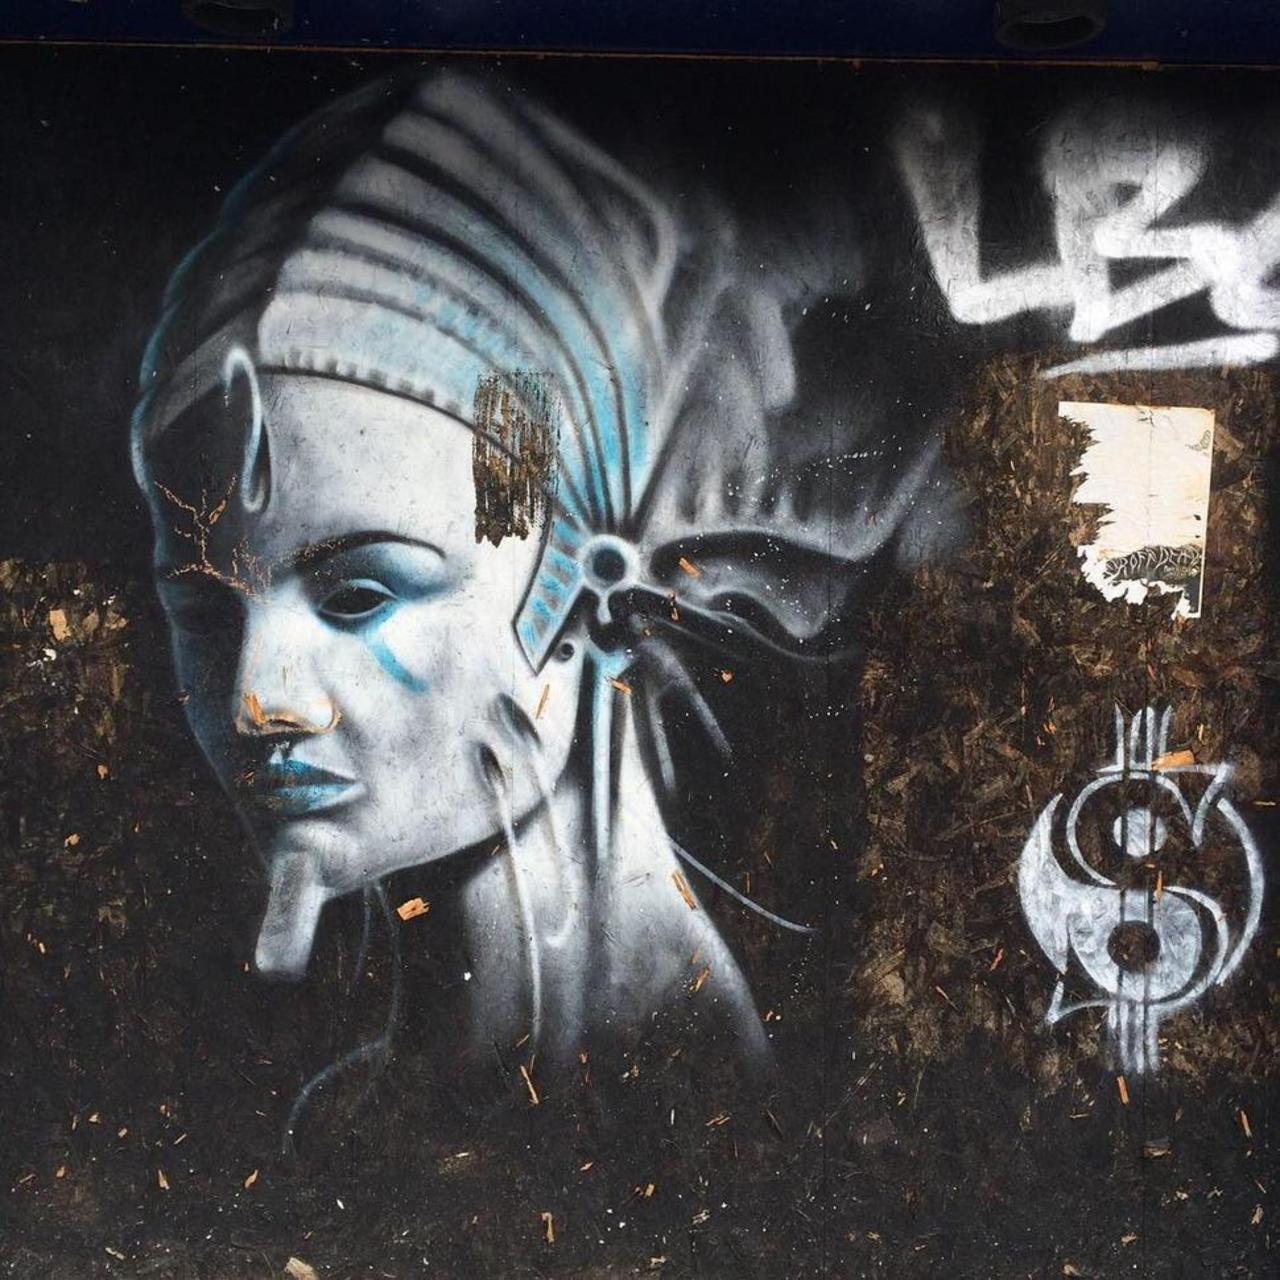 #StreetArt 526
#Graff #Graffiti #Art #urbanart 
#france #PuyDeDôme #Clermont
09/2015

 https://instagram.com/p/7zuinZm69E/ http://t.co/ebQGJmuMP9